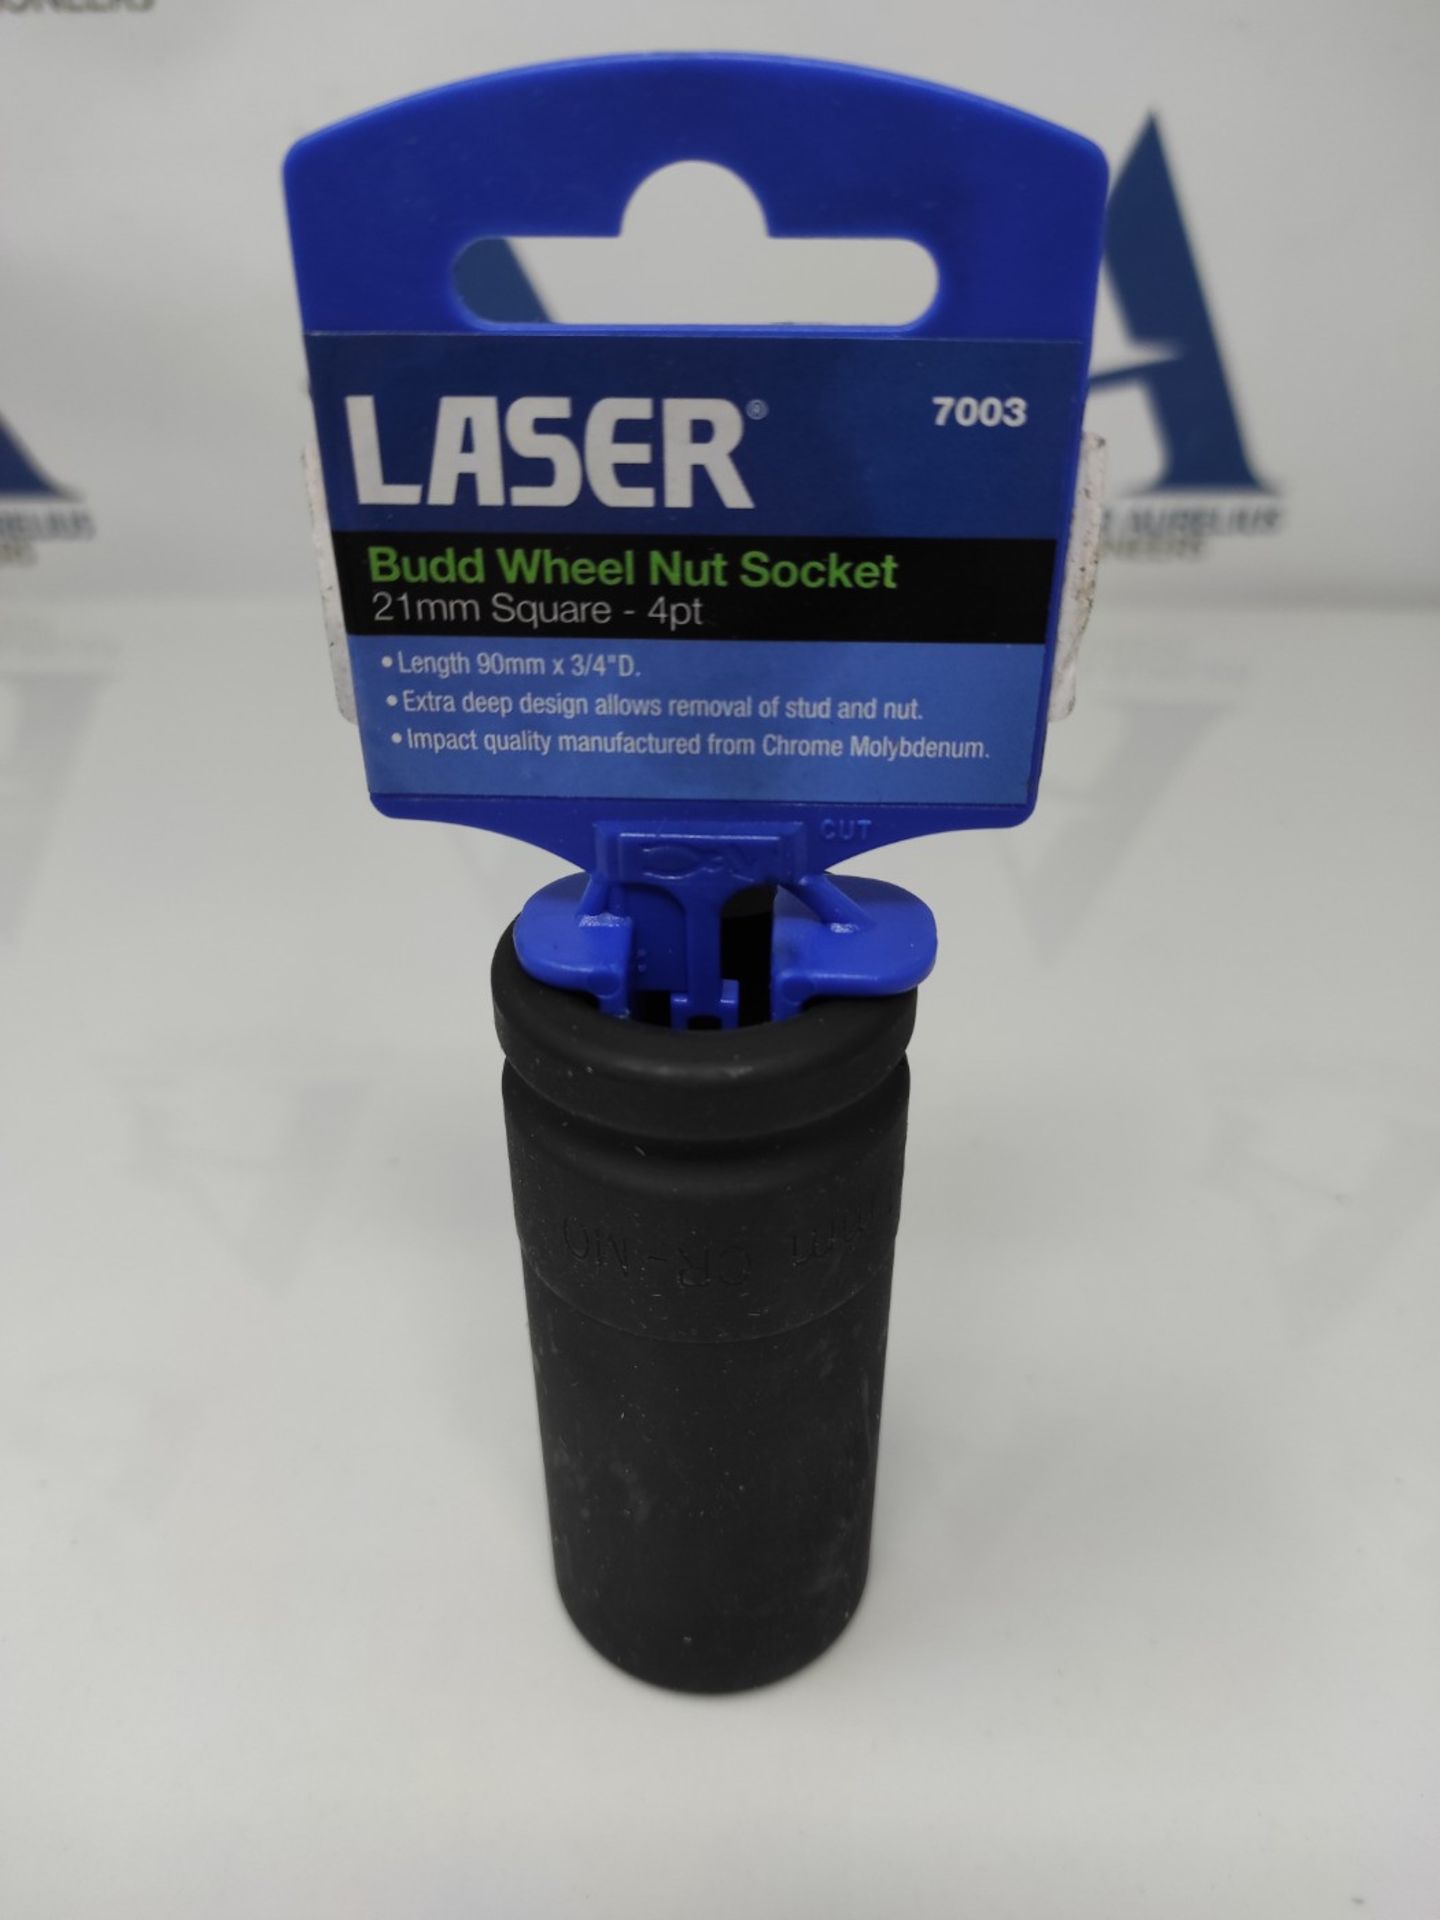 Laser 7003 Budd Wheel Nut Socket 3/4"D 21mm - Image 2 of 2